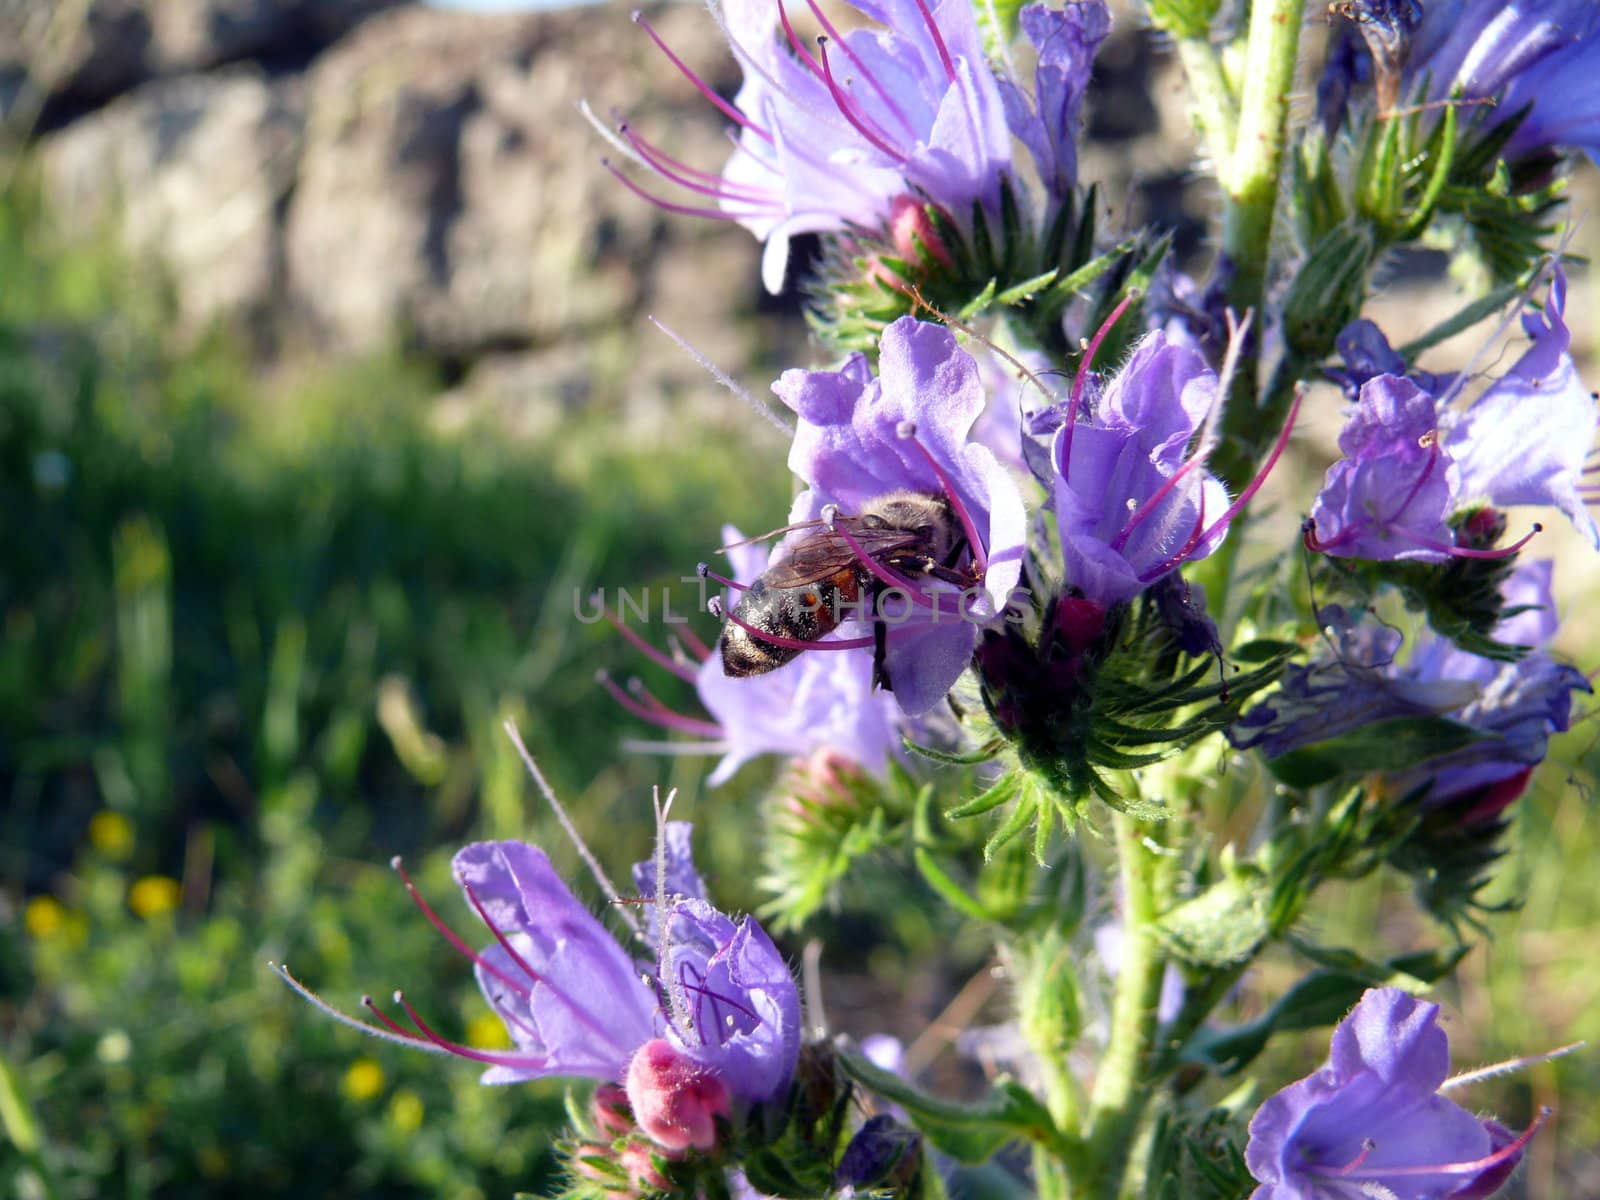 Bee (Apis mellifera) on a flower (Echium vulgare) by Stoyanov